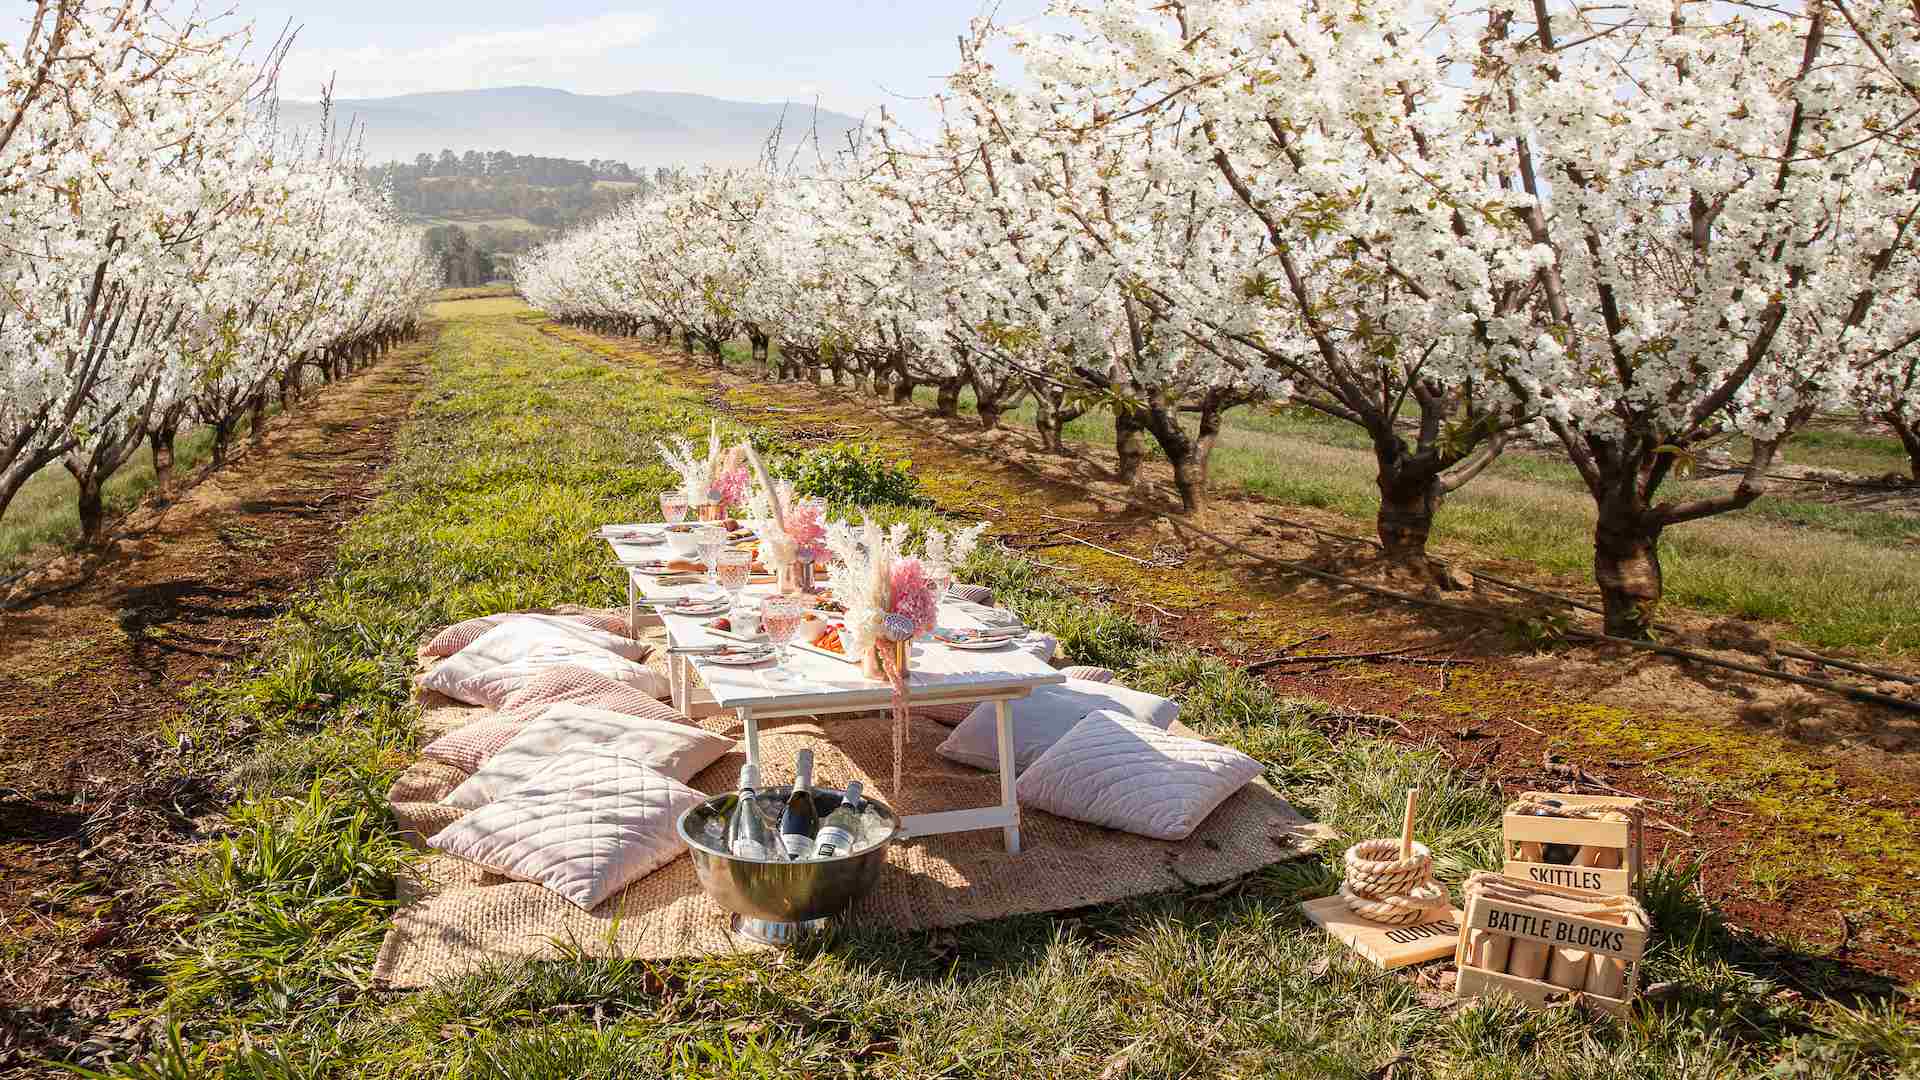 Cherryhill Orchards Blossom Festival 2022